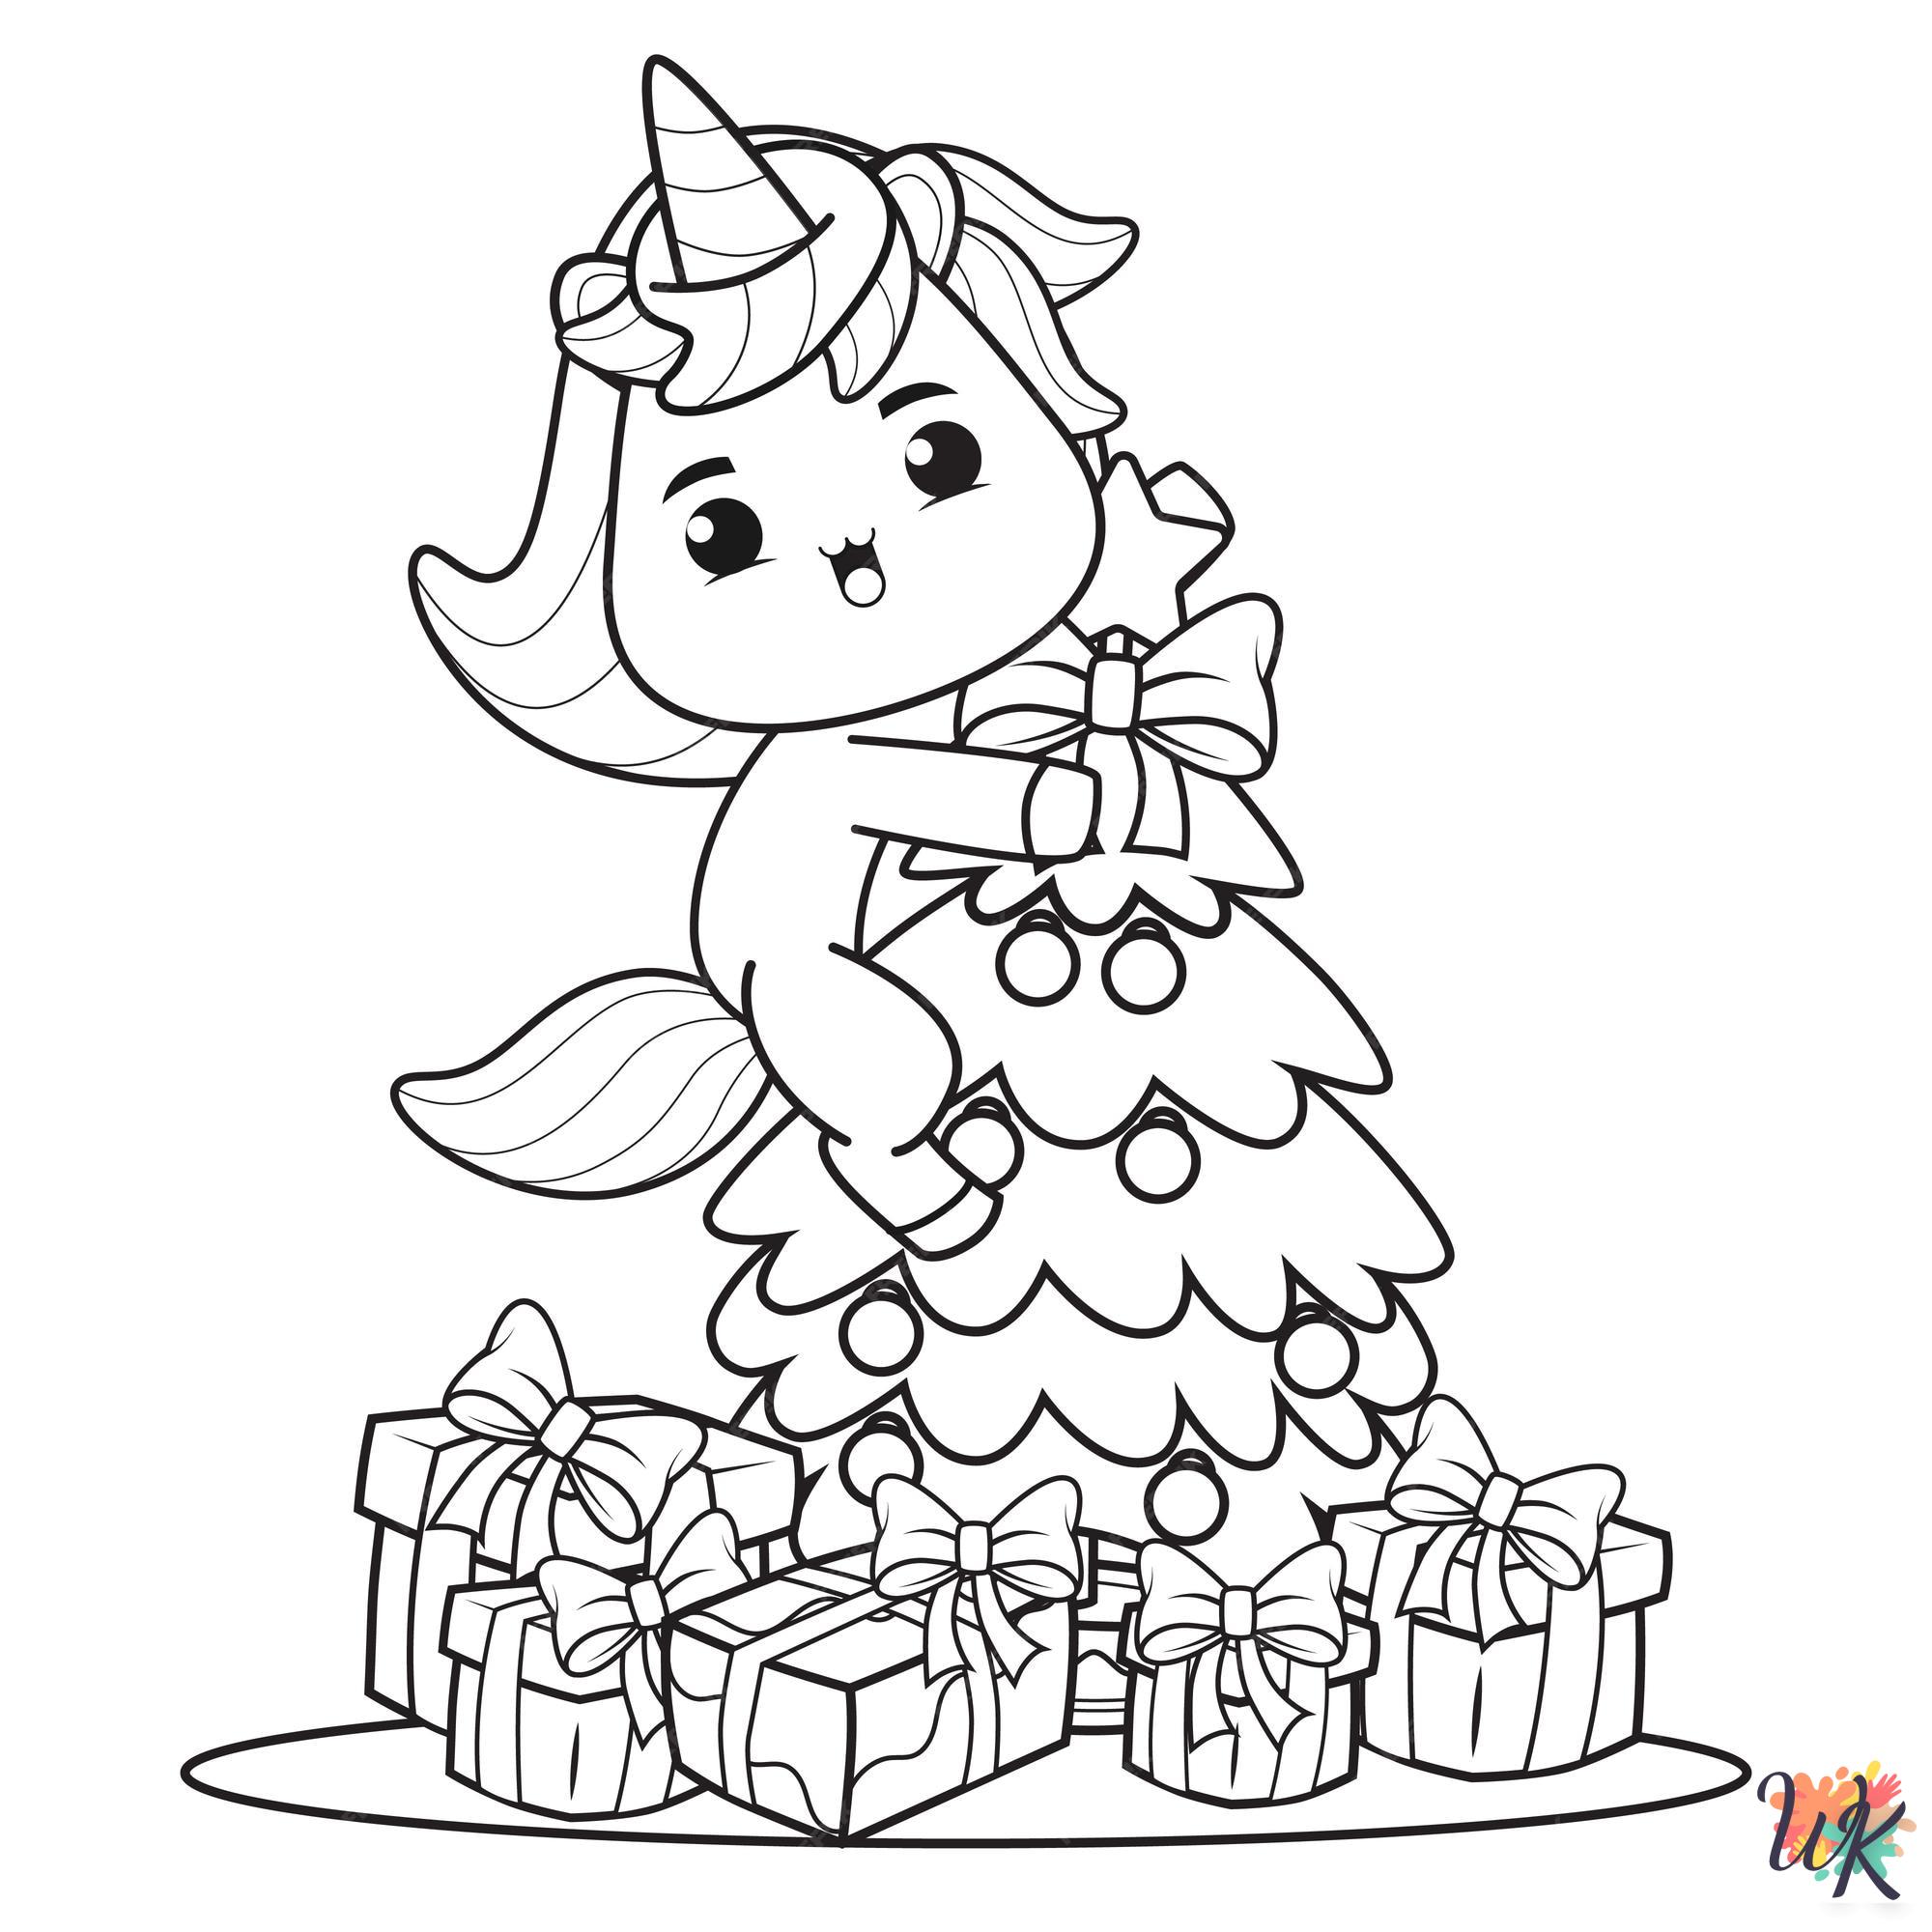 Christmas Unicorn coloring pages free printable